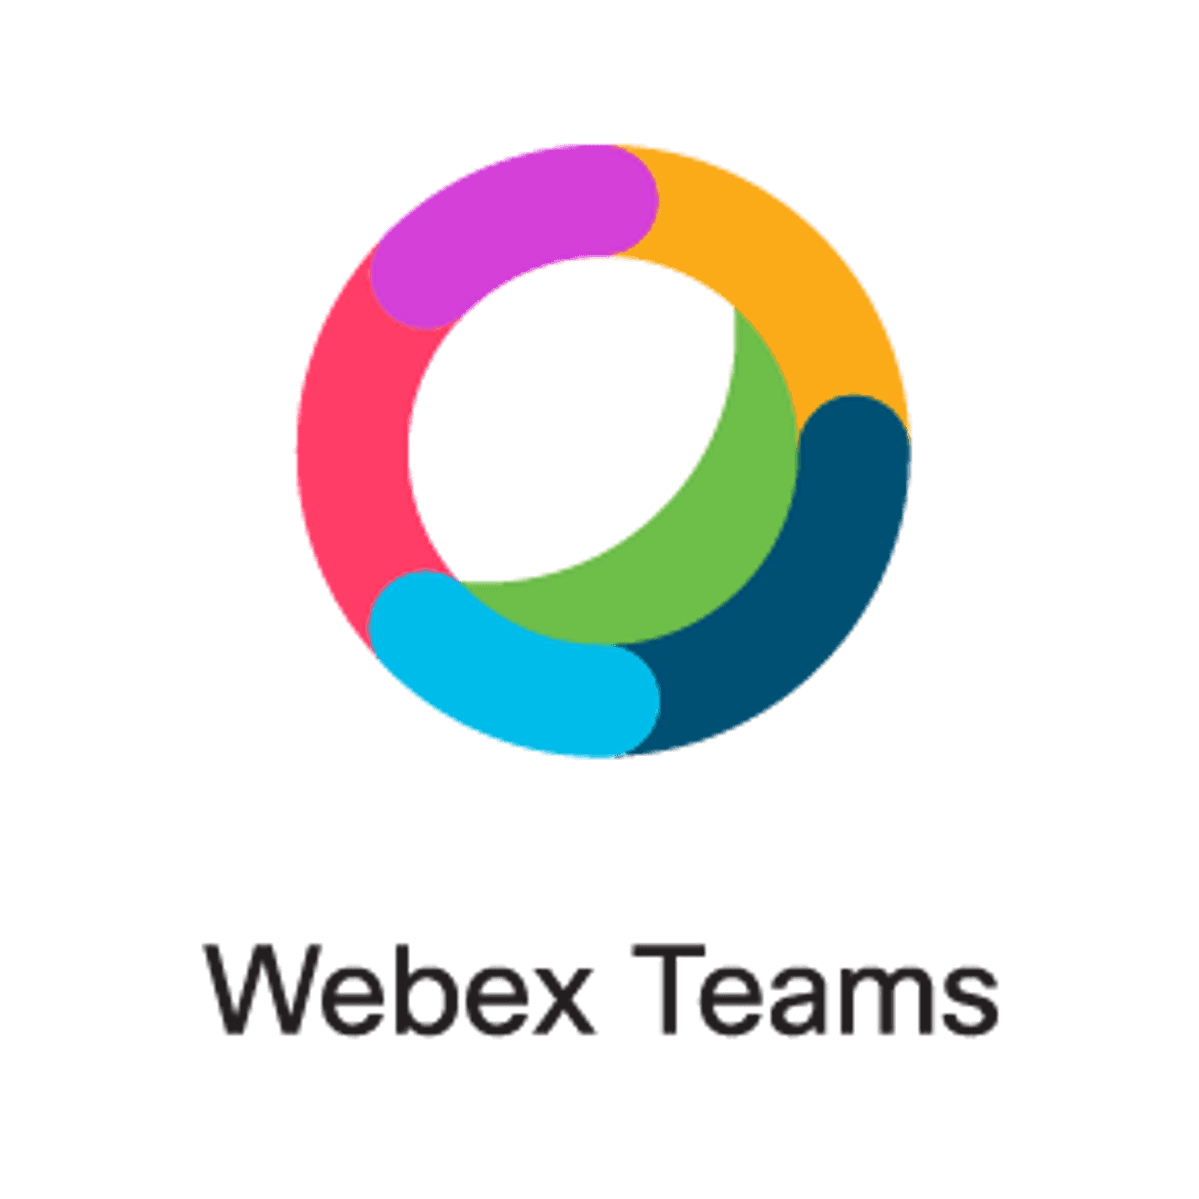 Teaching Lab TU Delft kiest voor Cisco WebEx Teams via Avit image